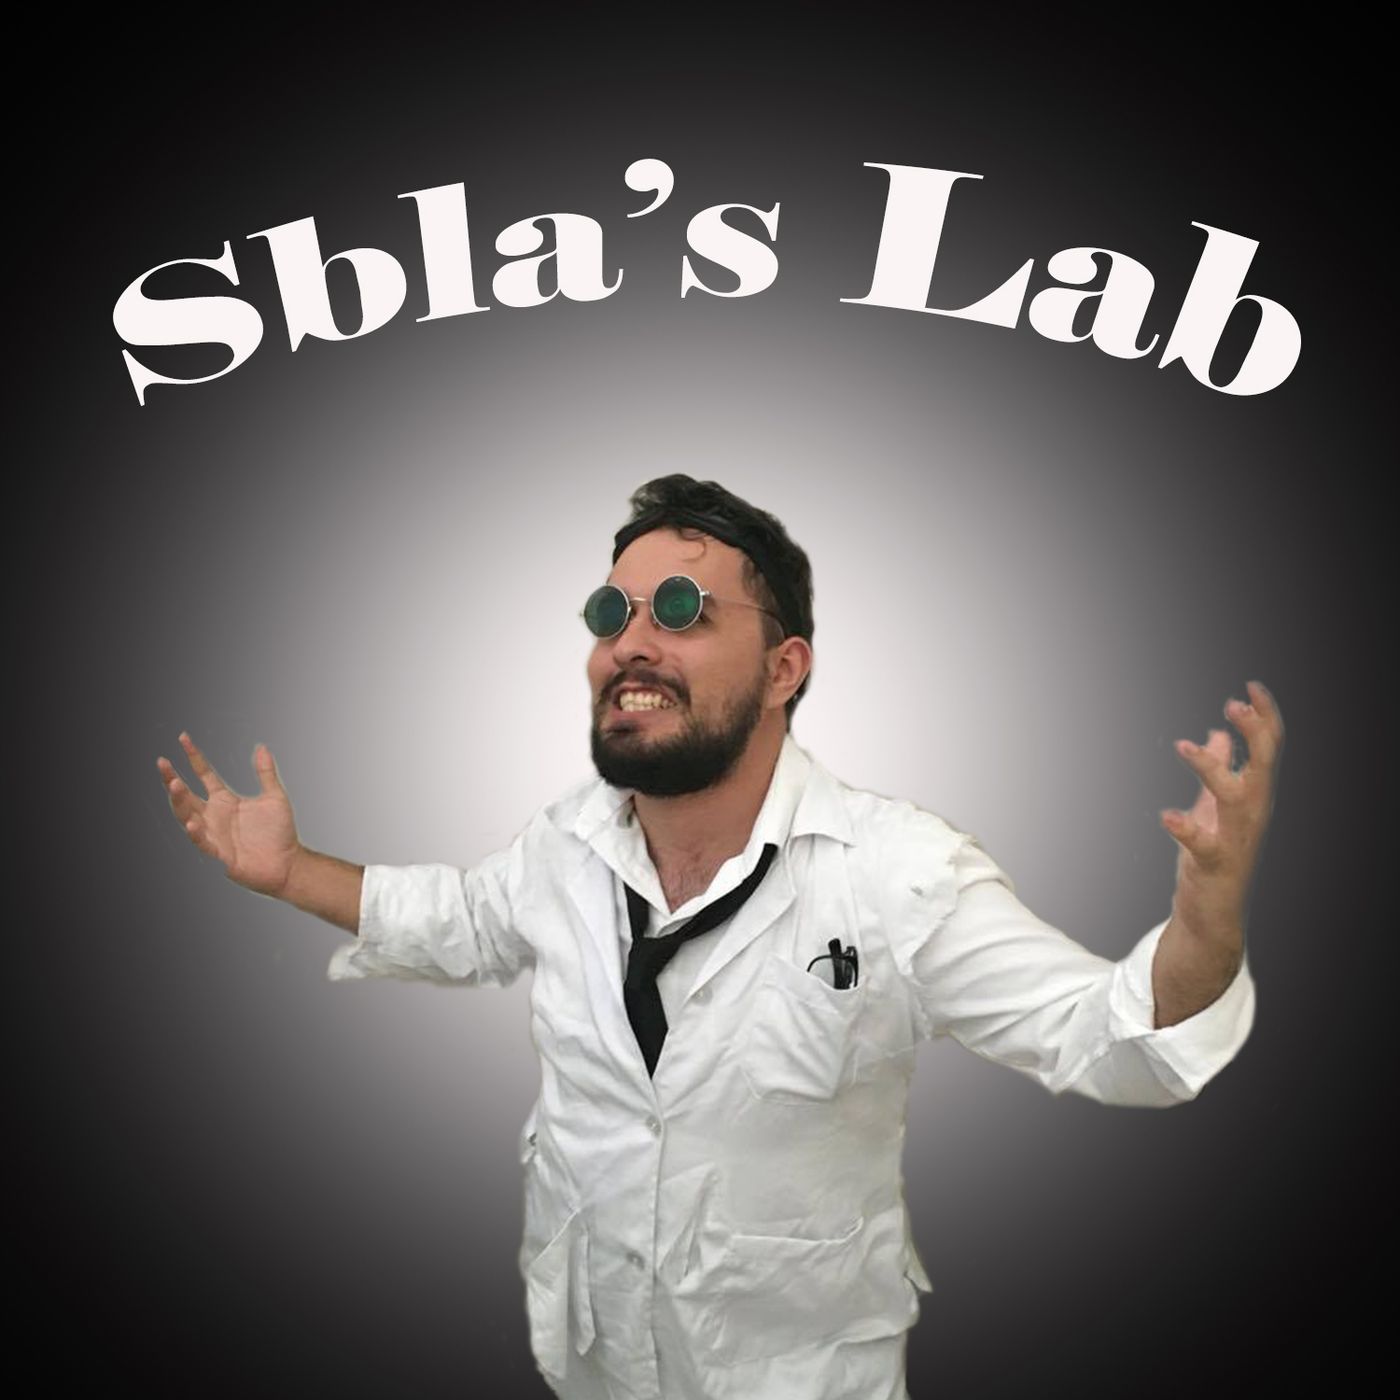 Dr. Sbla's Lab